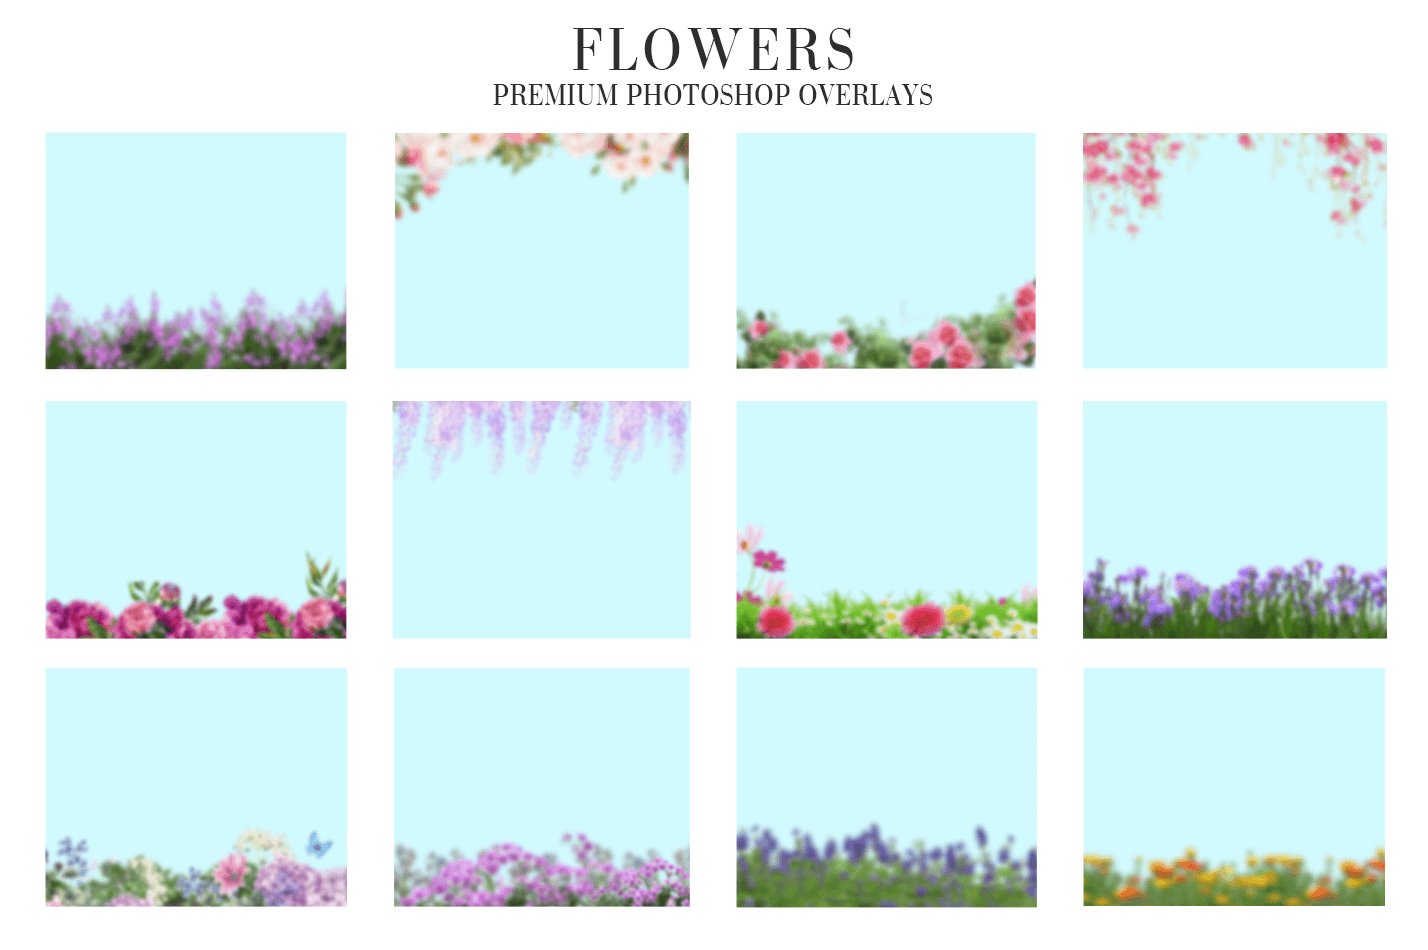 Flower Overlays Photoshoppreview image.